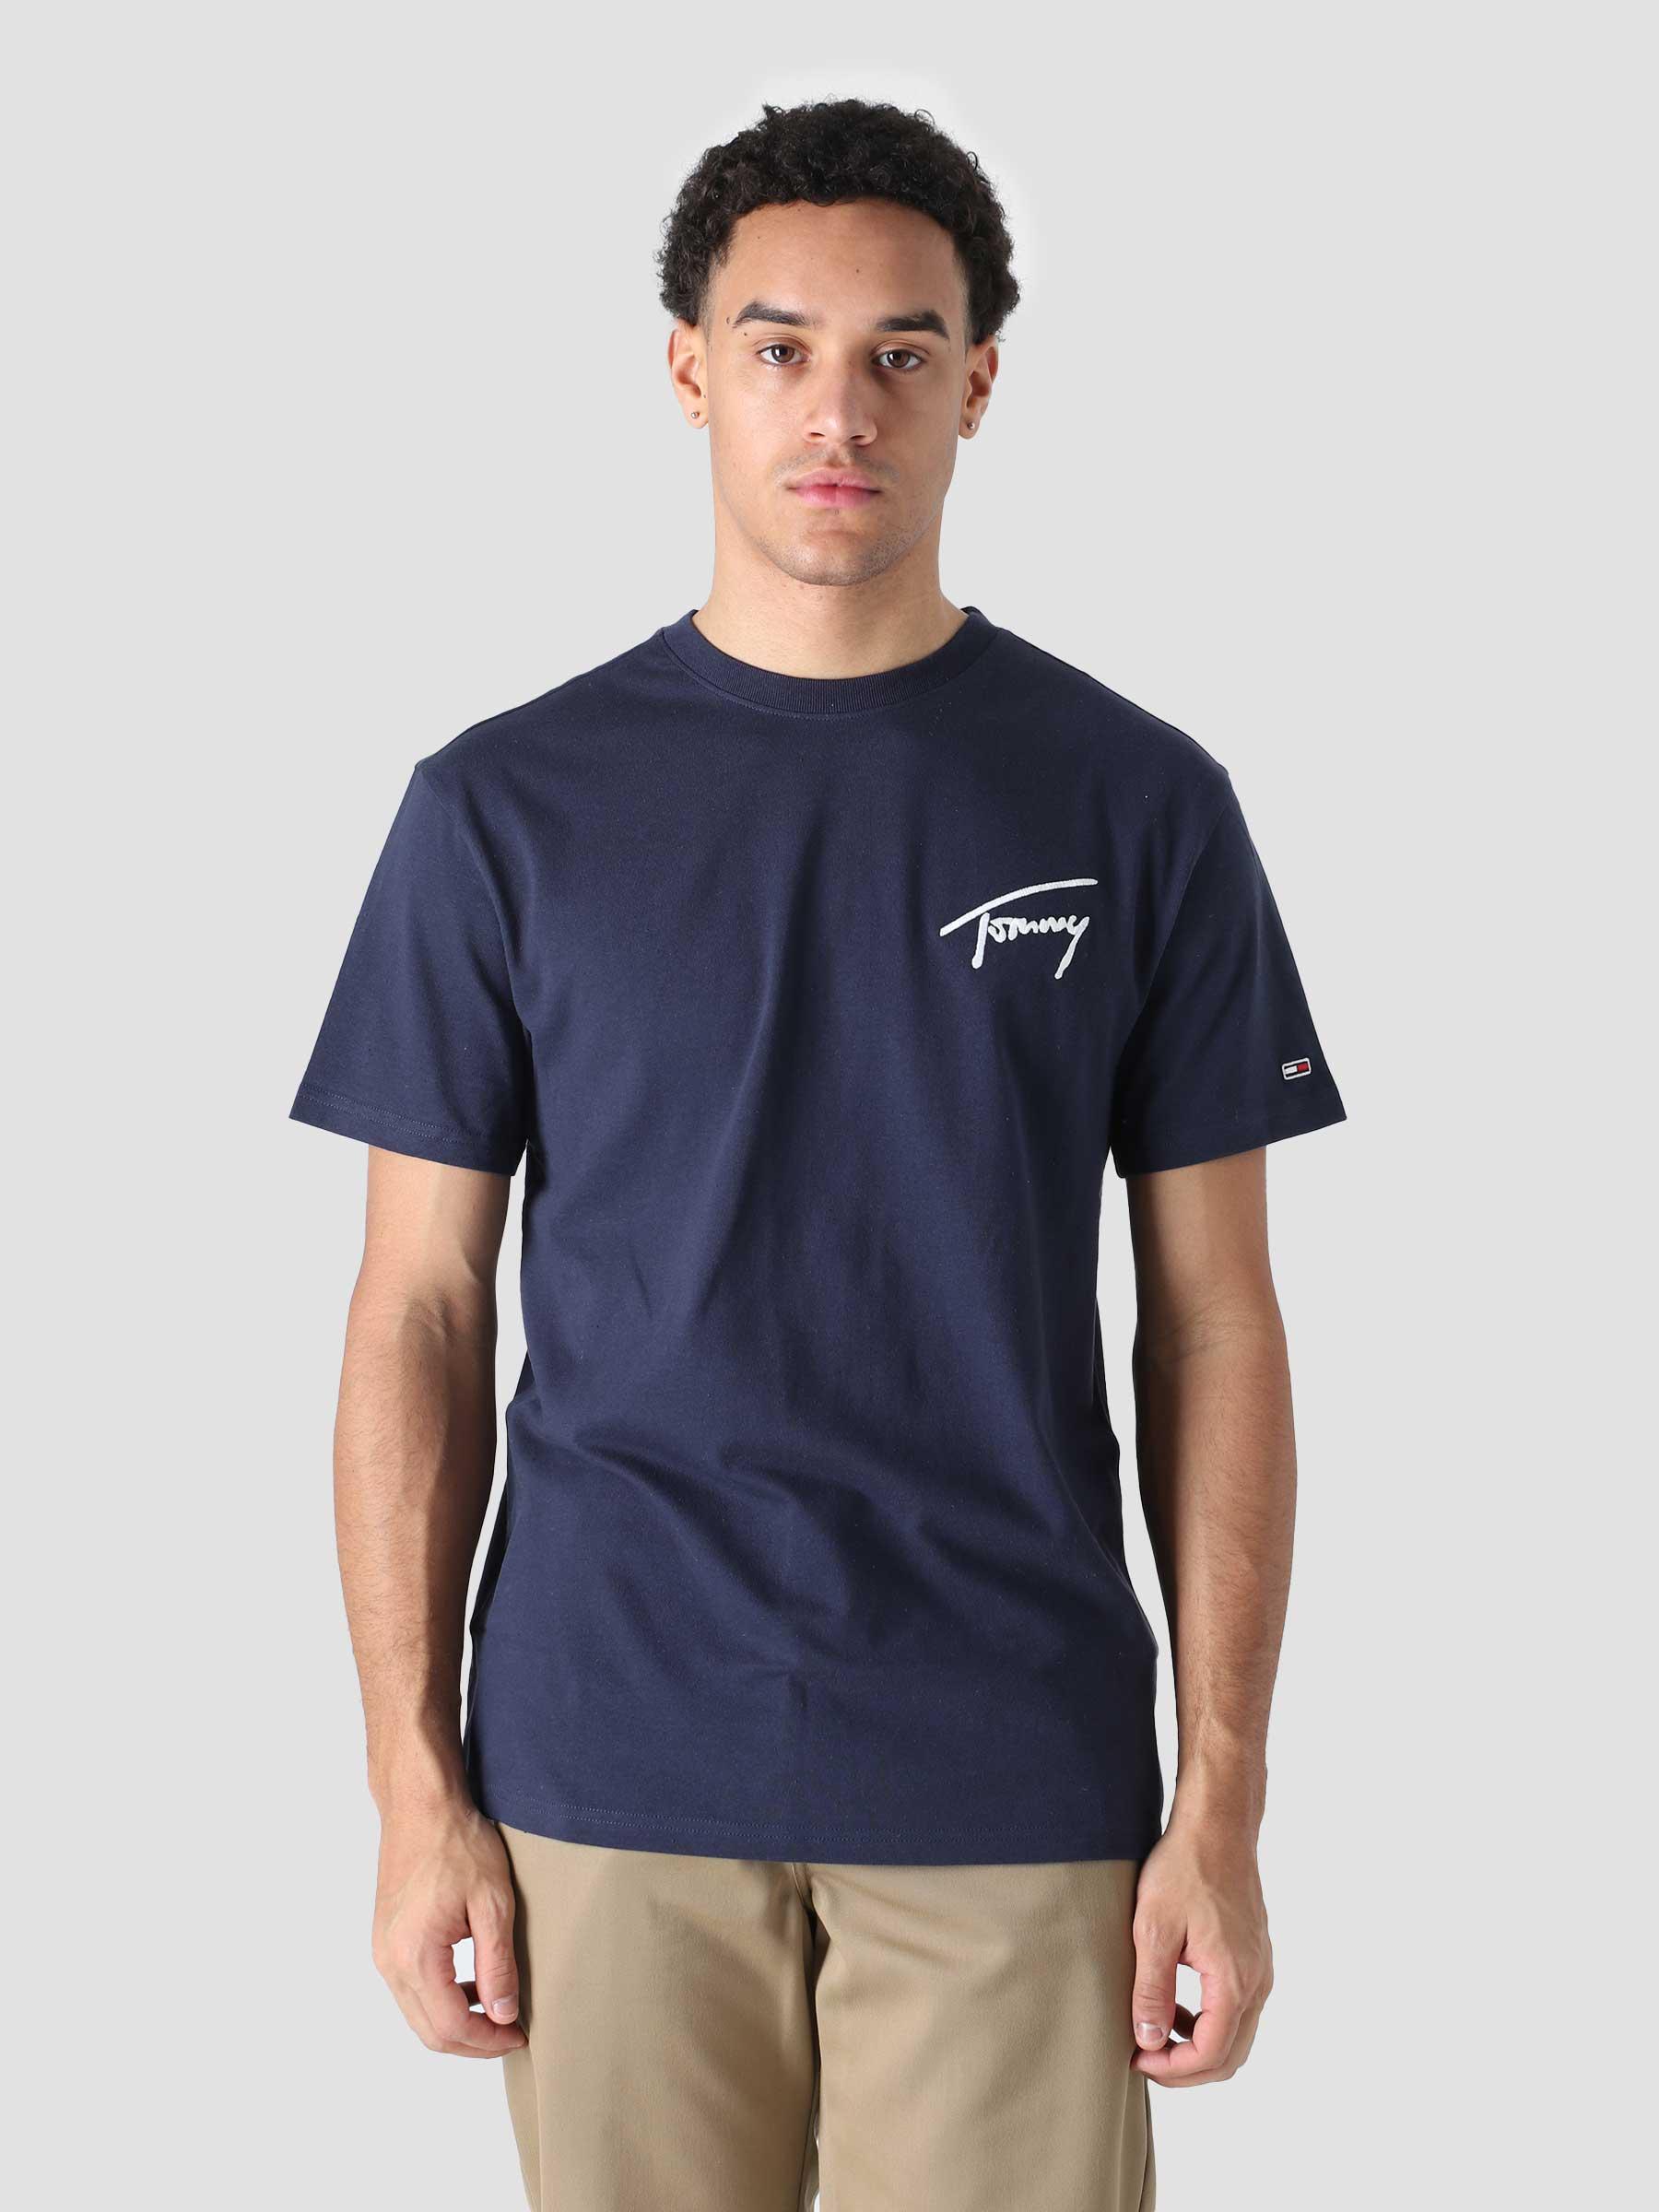 Freshcotton - Jeans TJM Signature Twilight Tommy Tommy T-Shirt Navy